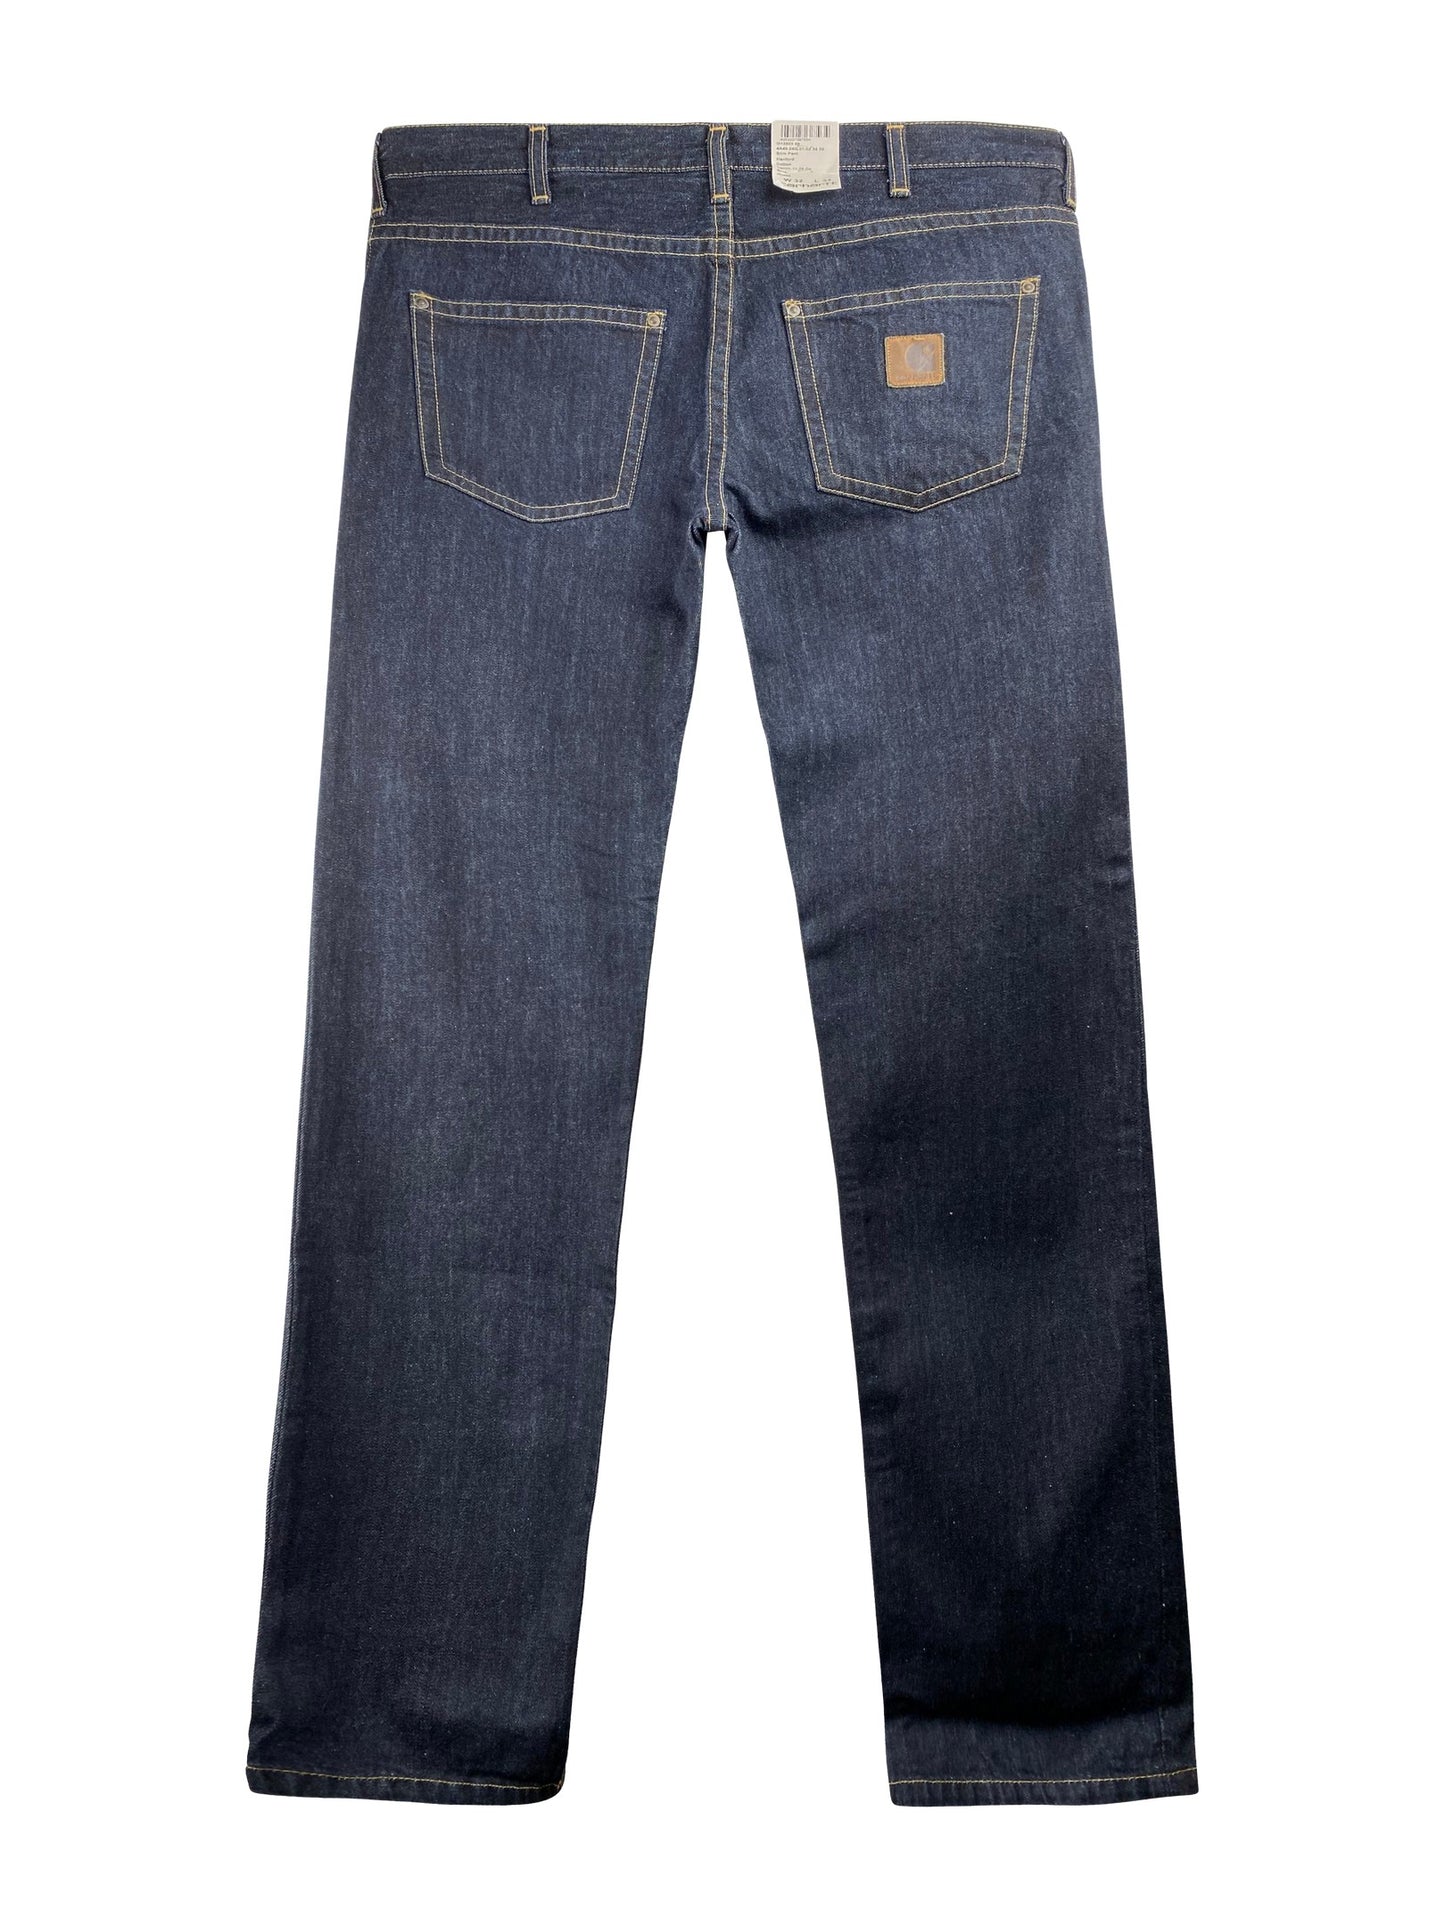 Carhartt Jeans “Slim Pant Hanford” -blue rinsed